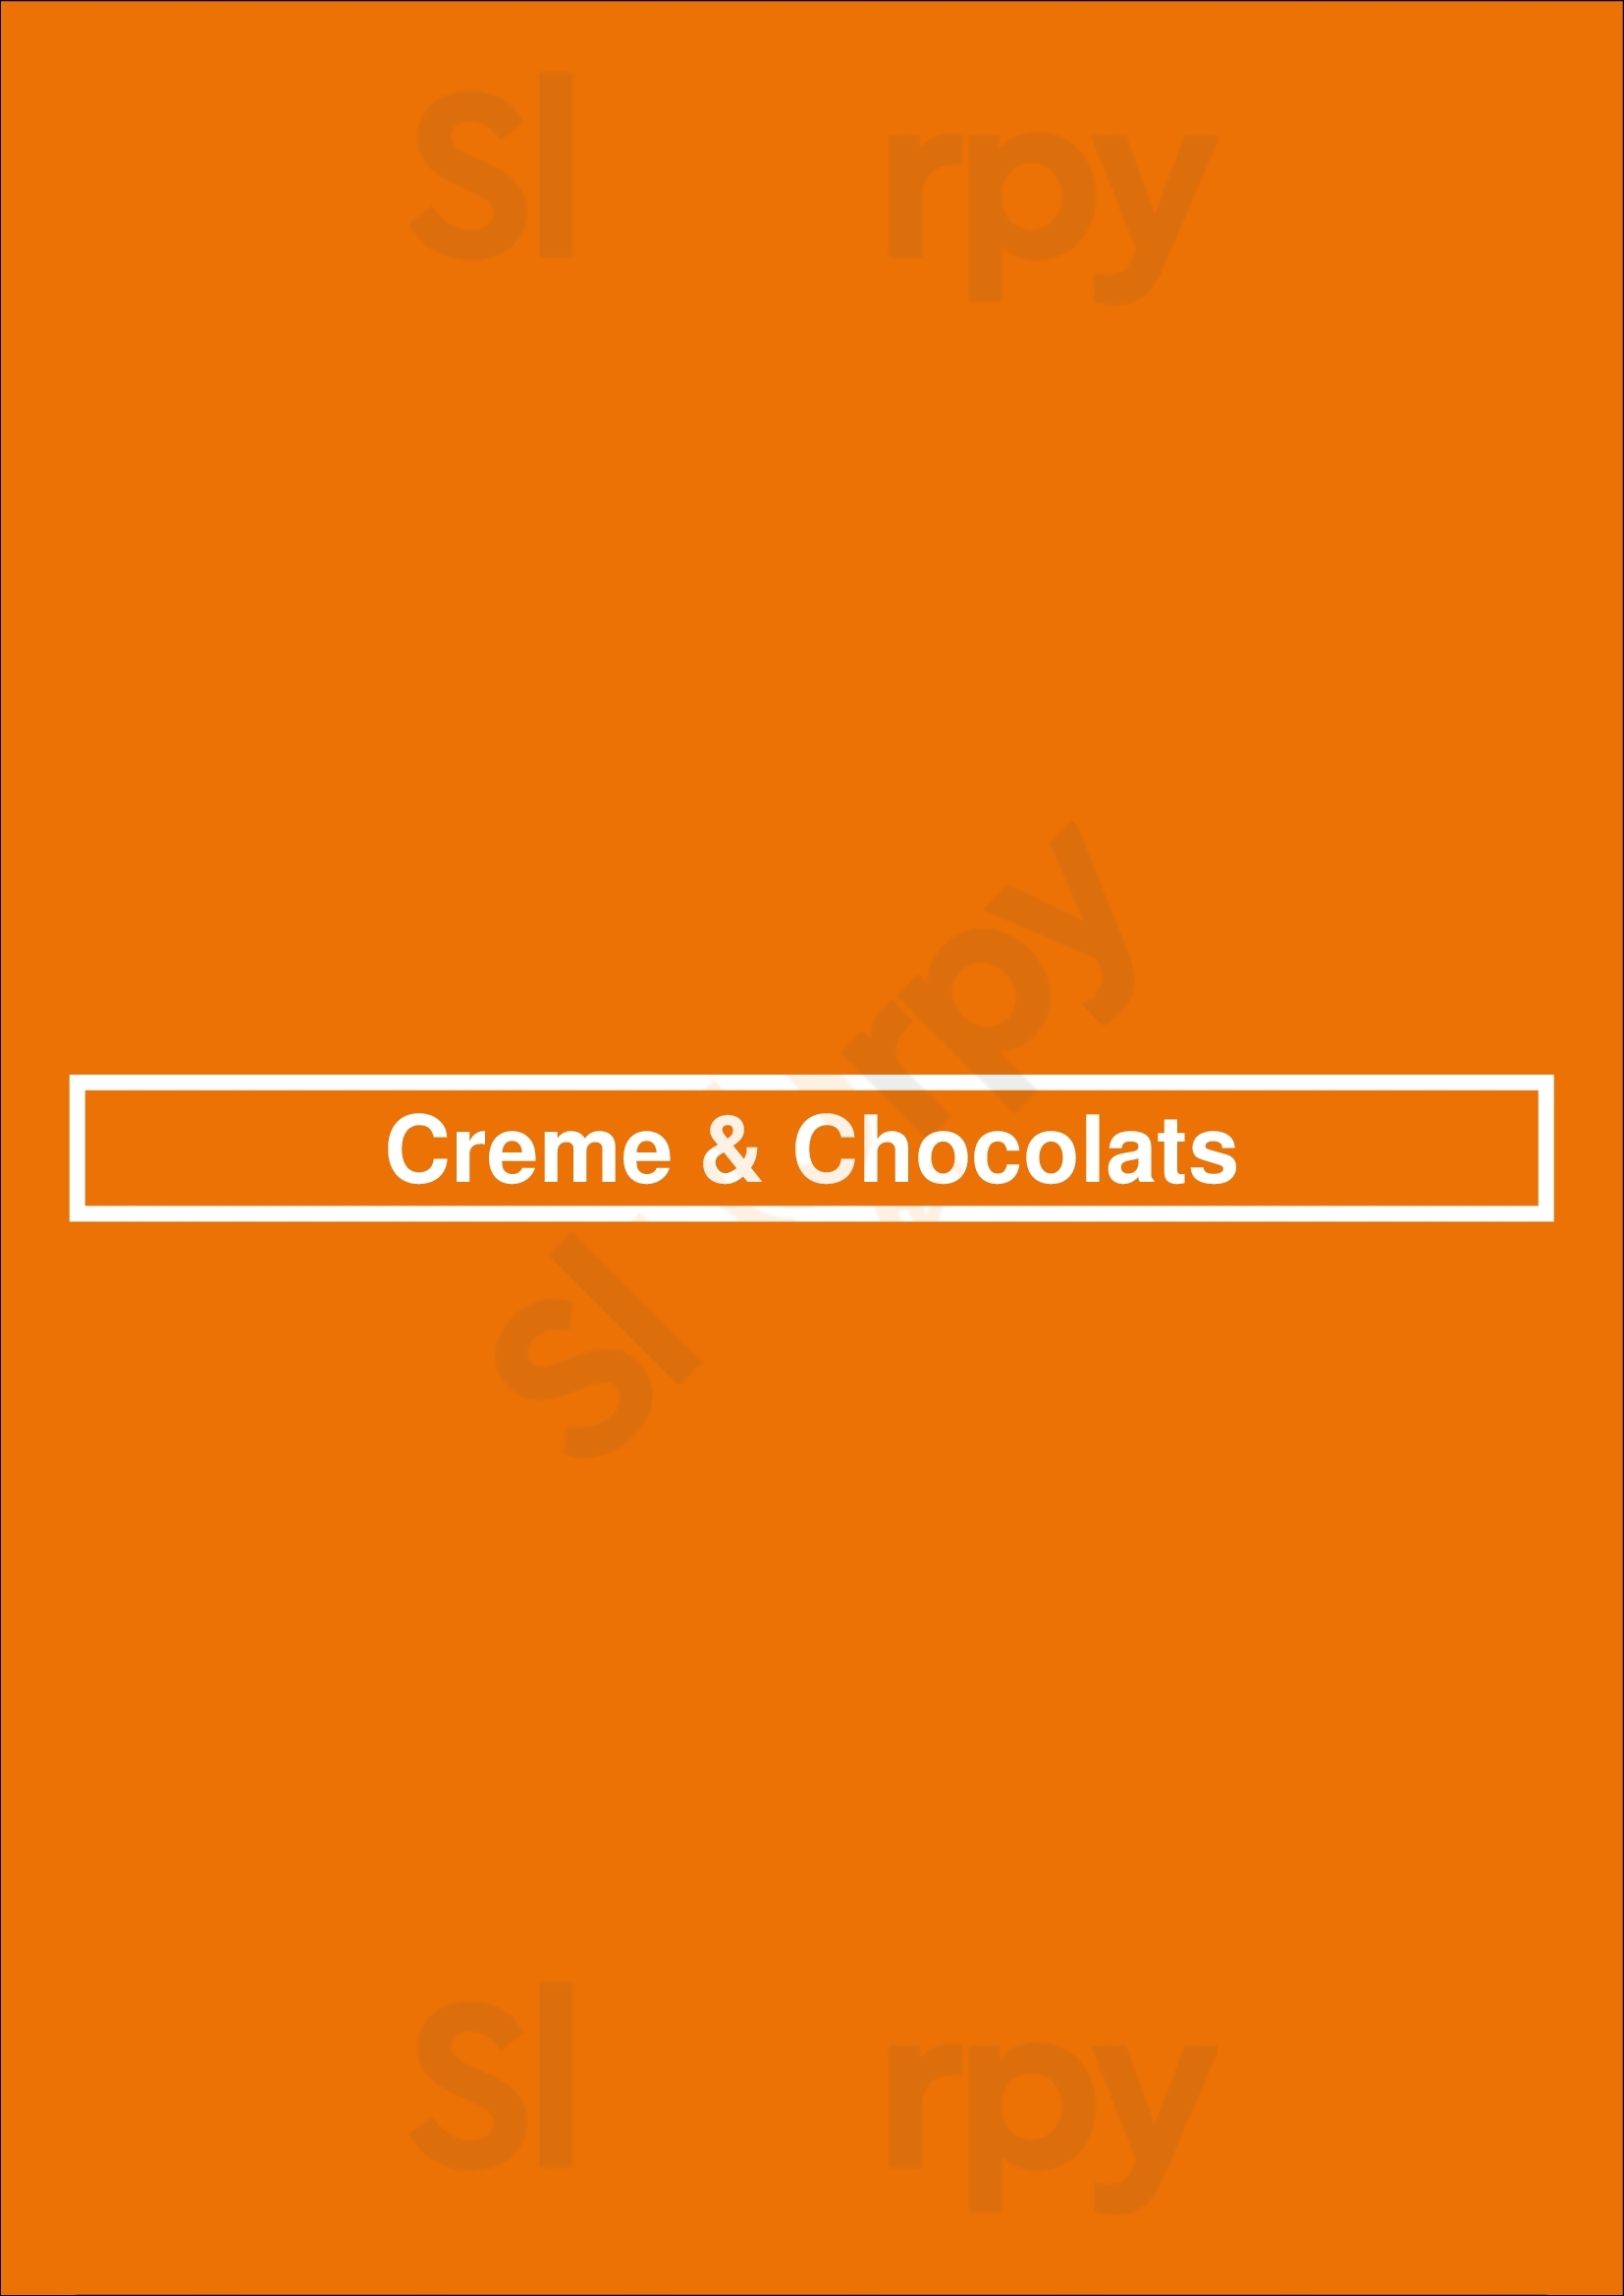 Creme & Chocolats Mesa Menu - 1